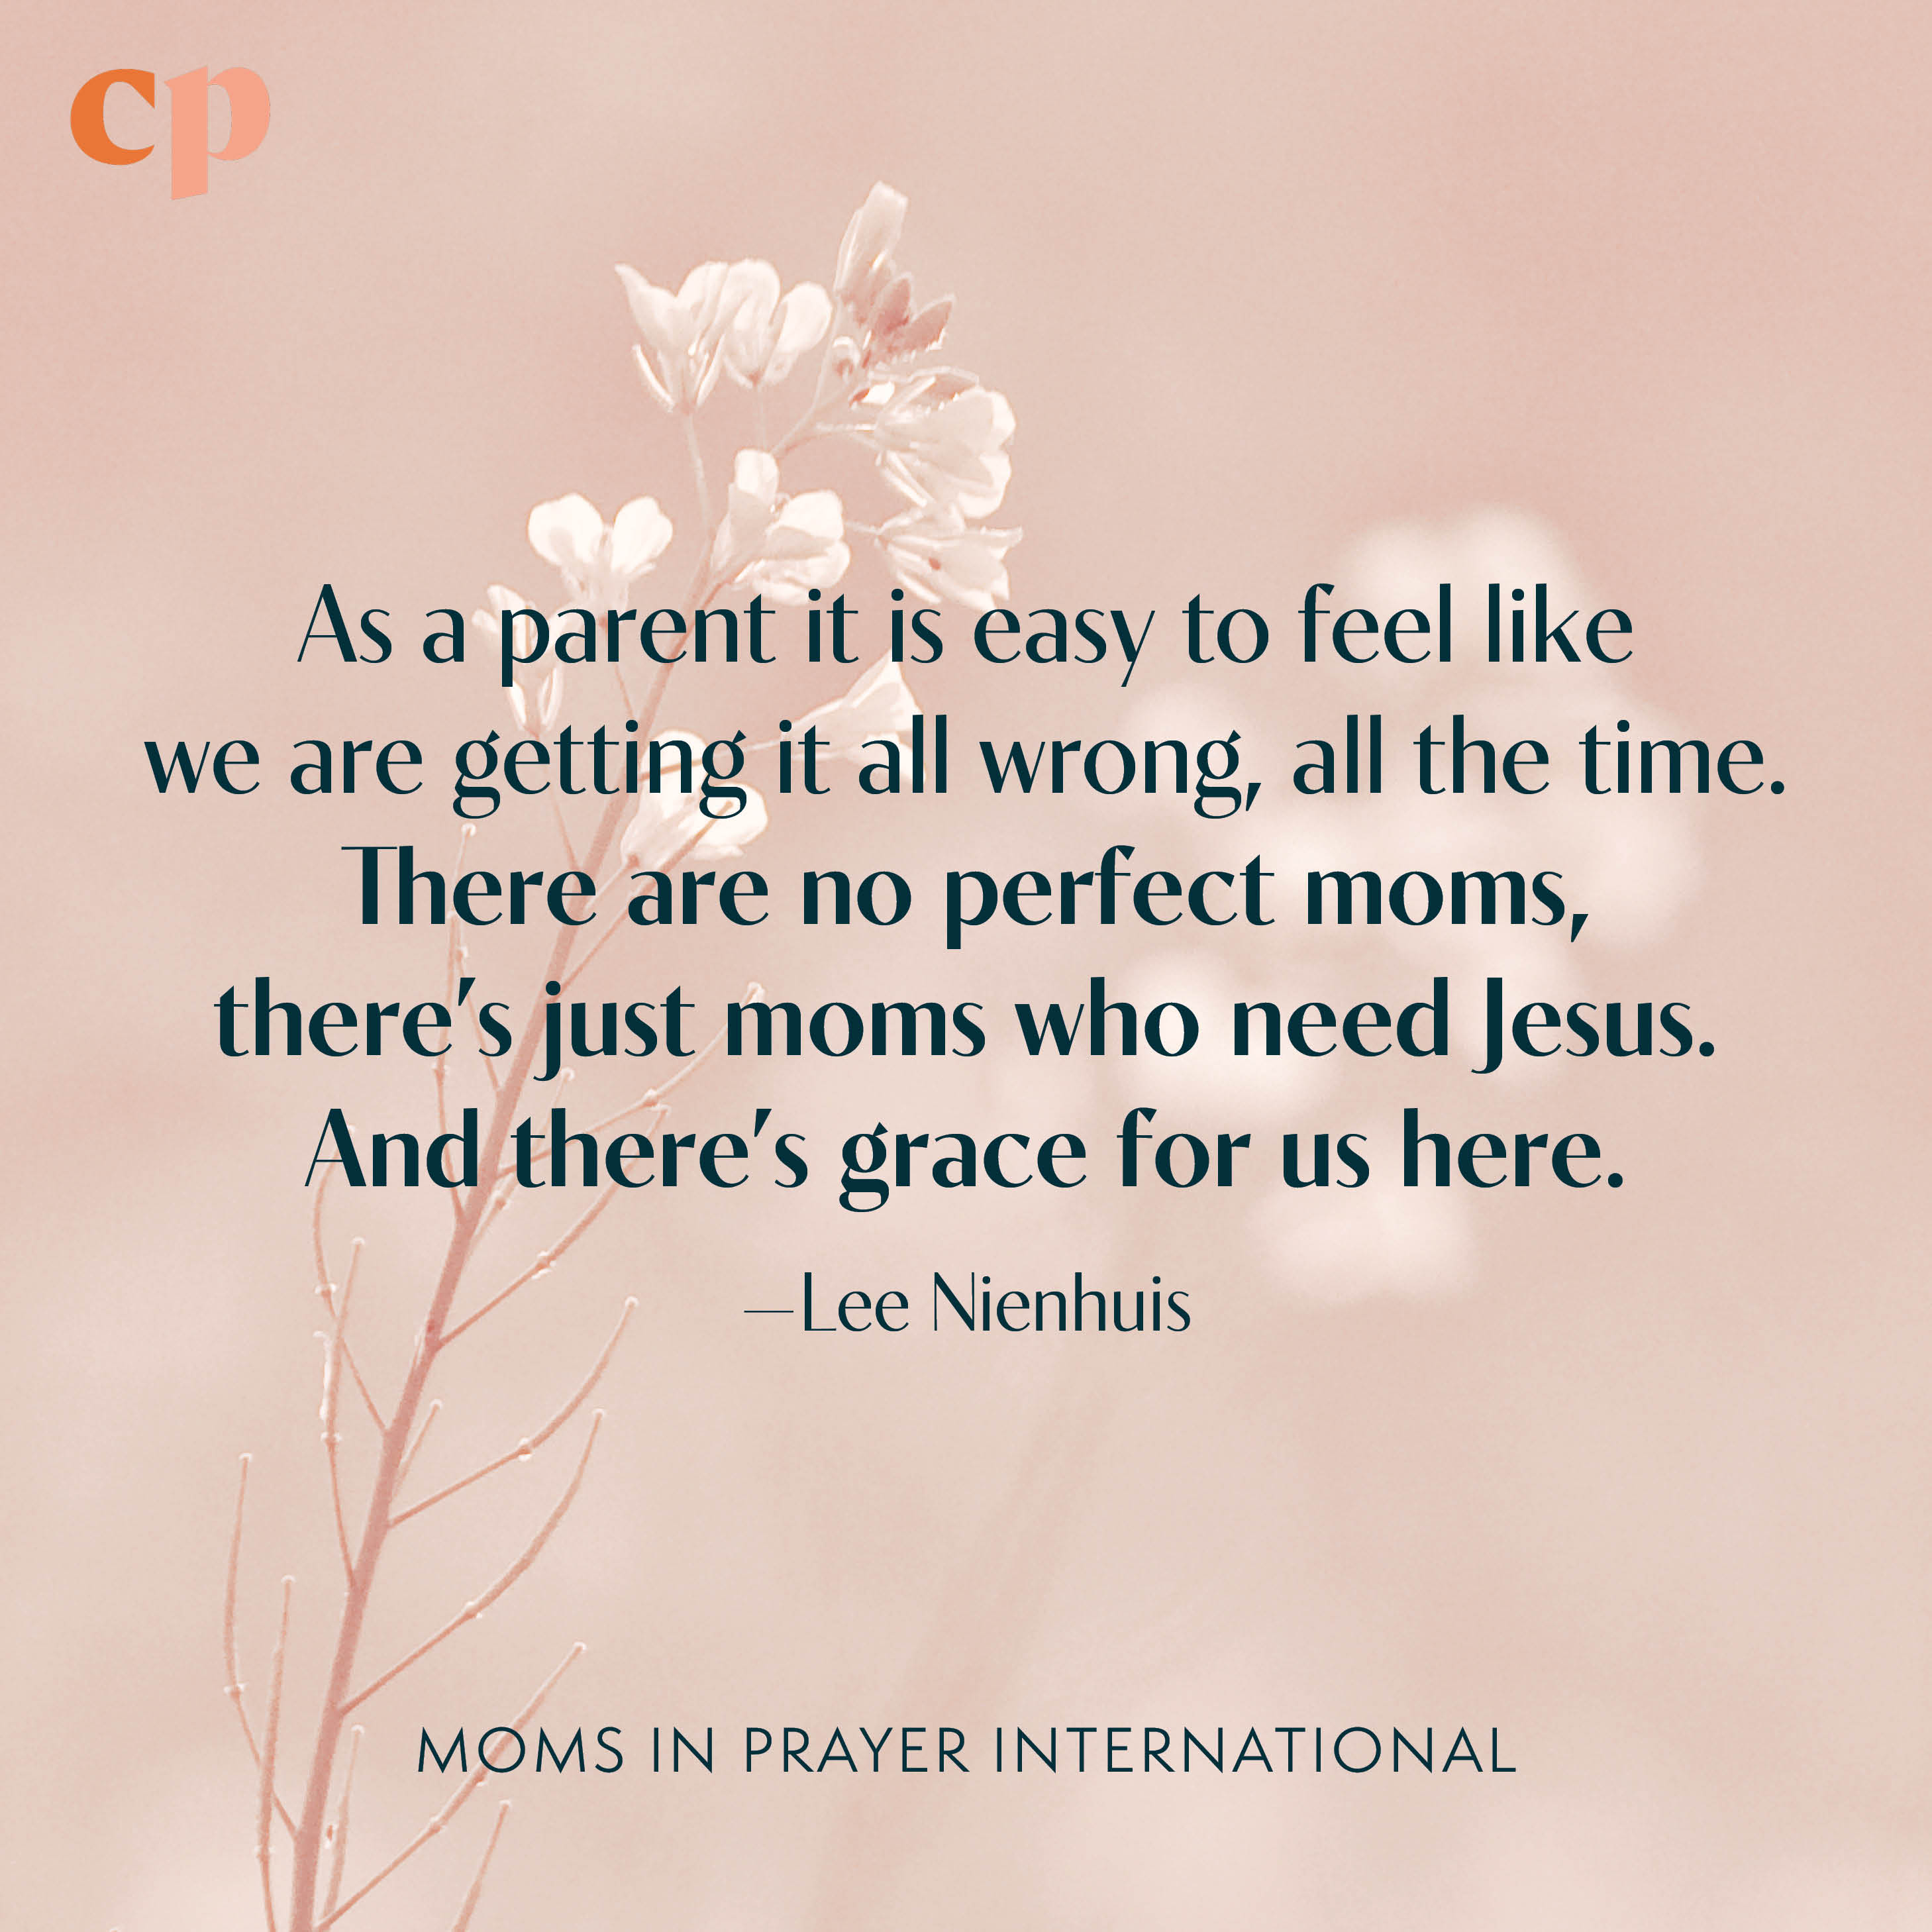 No more perfect moms